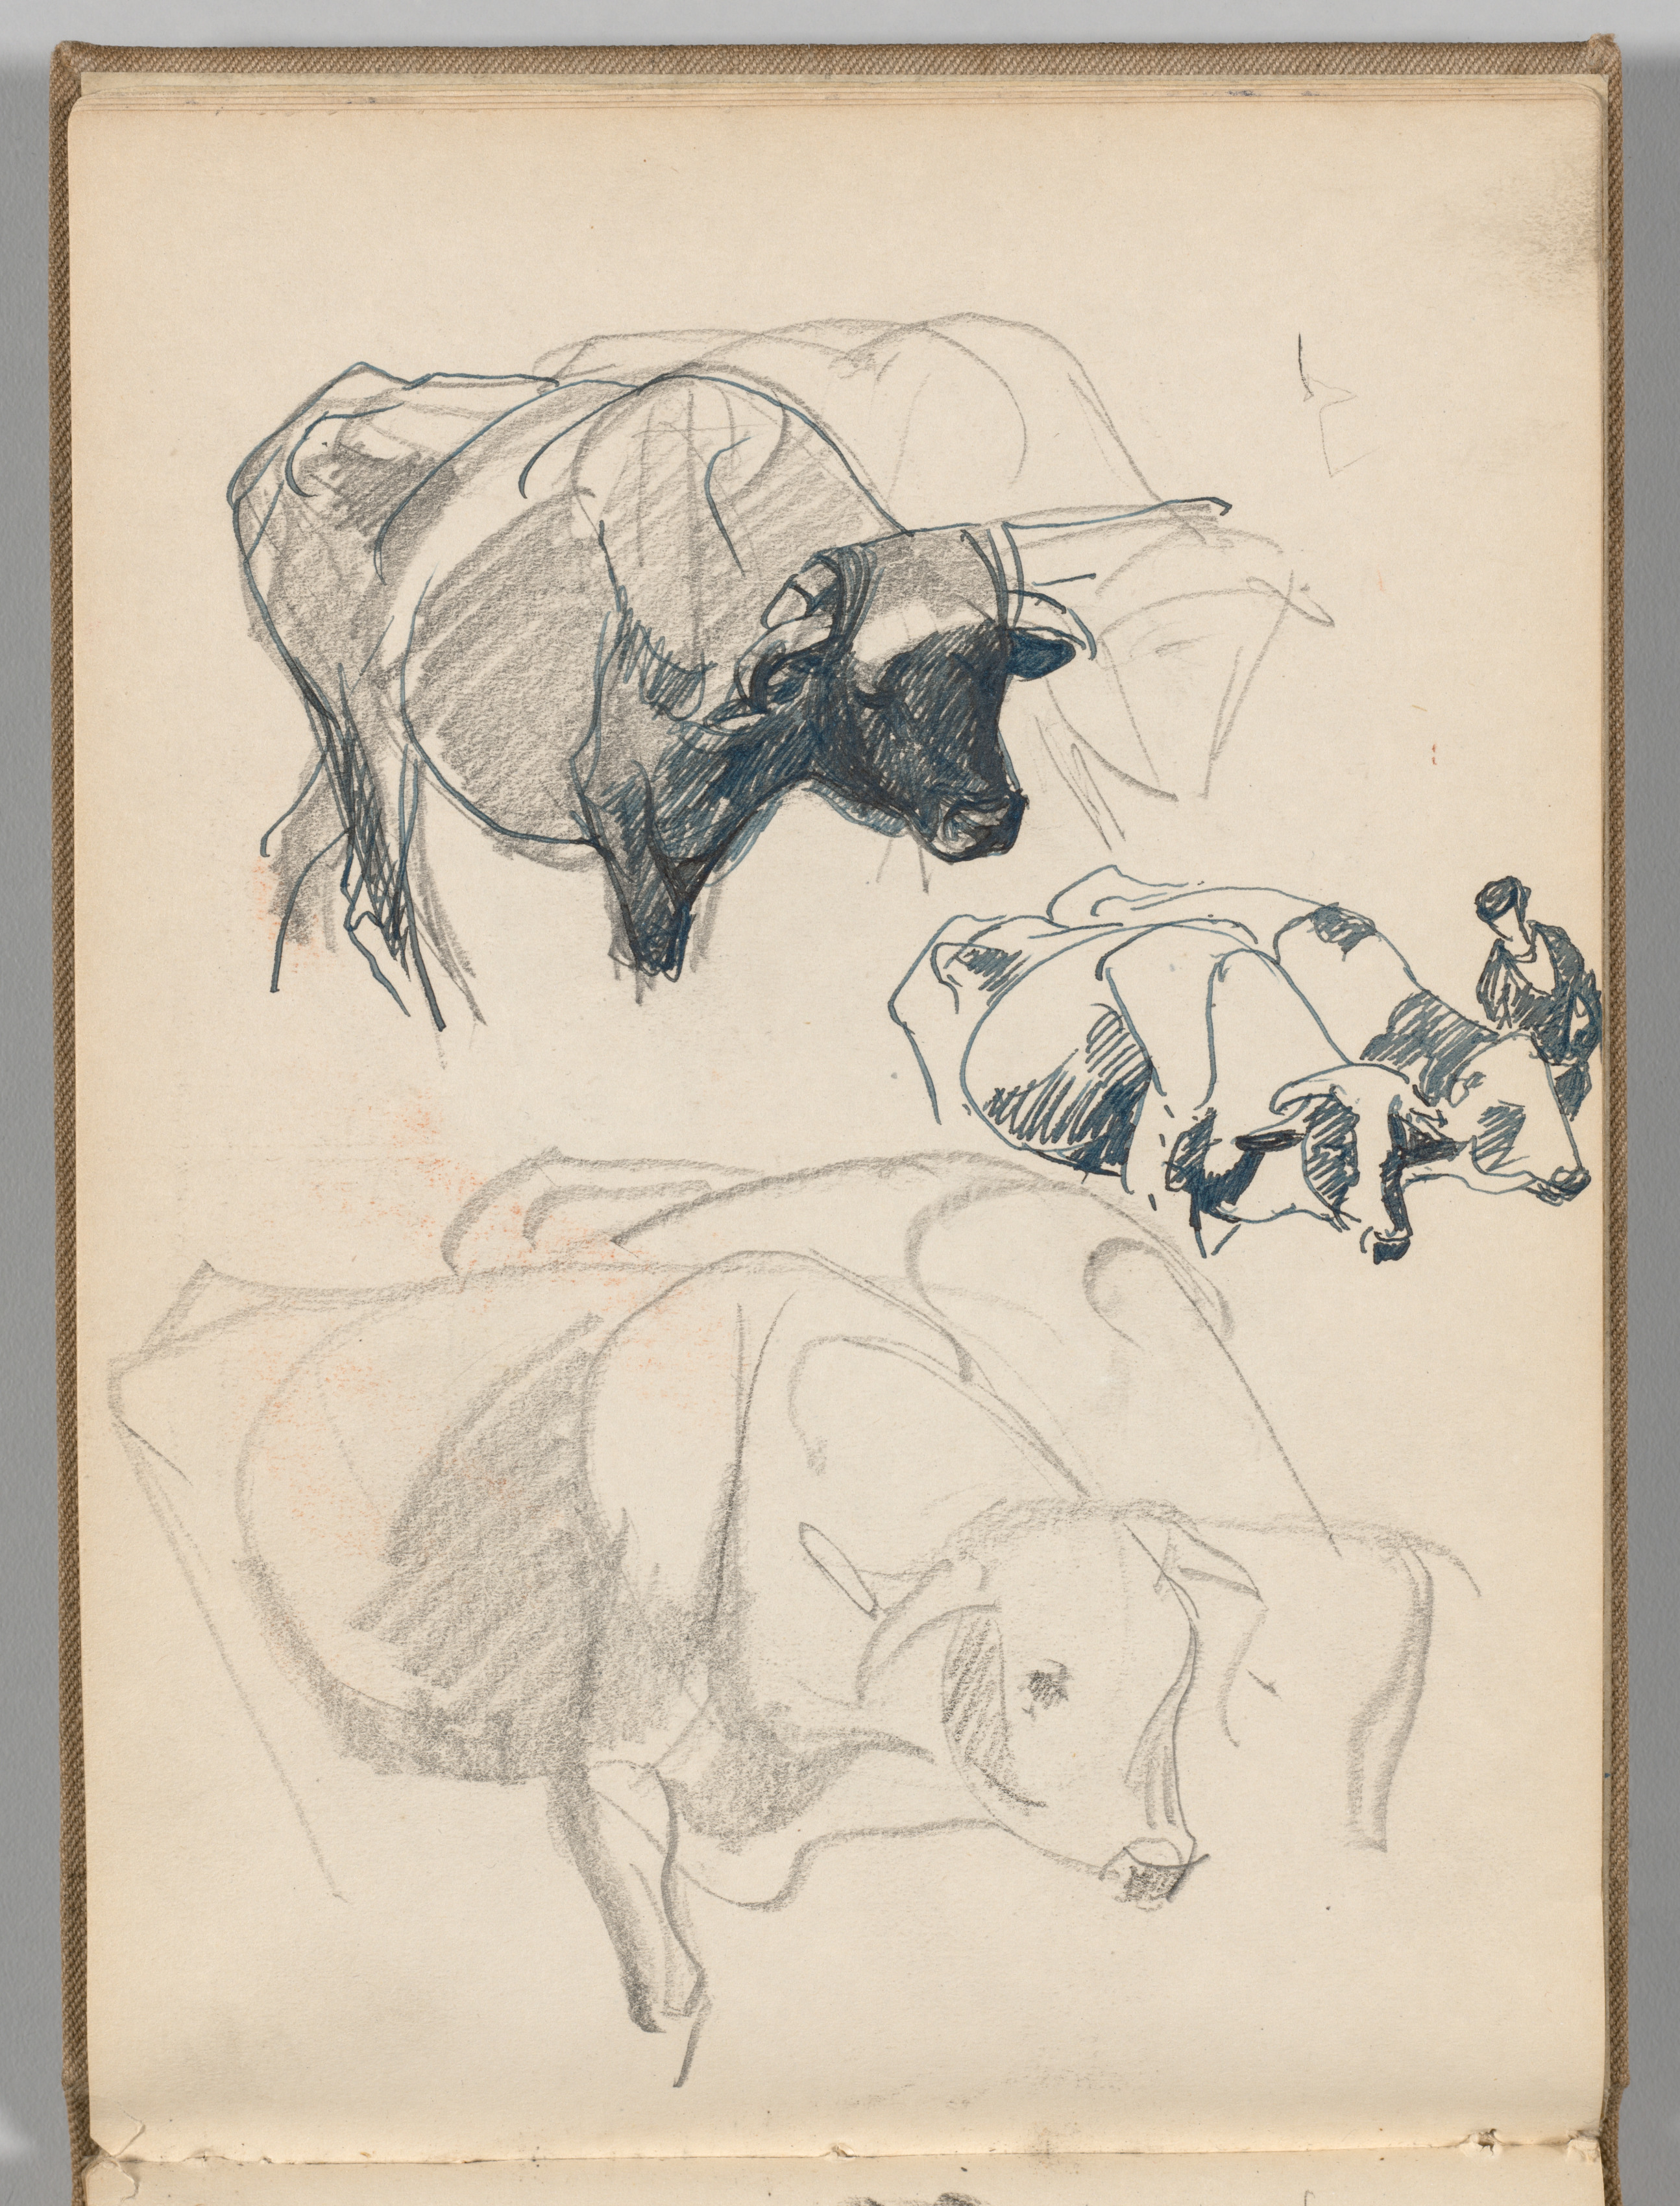 Sketchbook, Spain: Page 10, Oxen